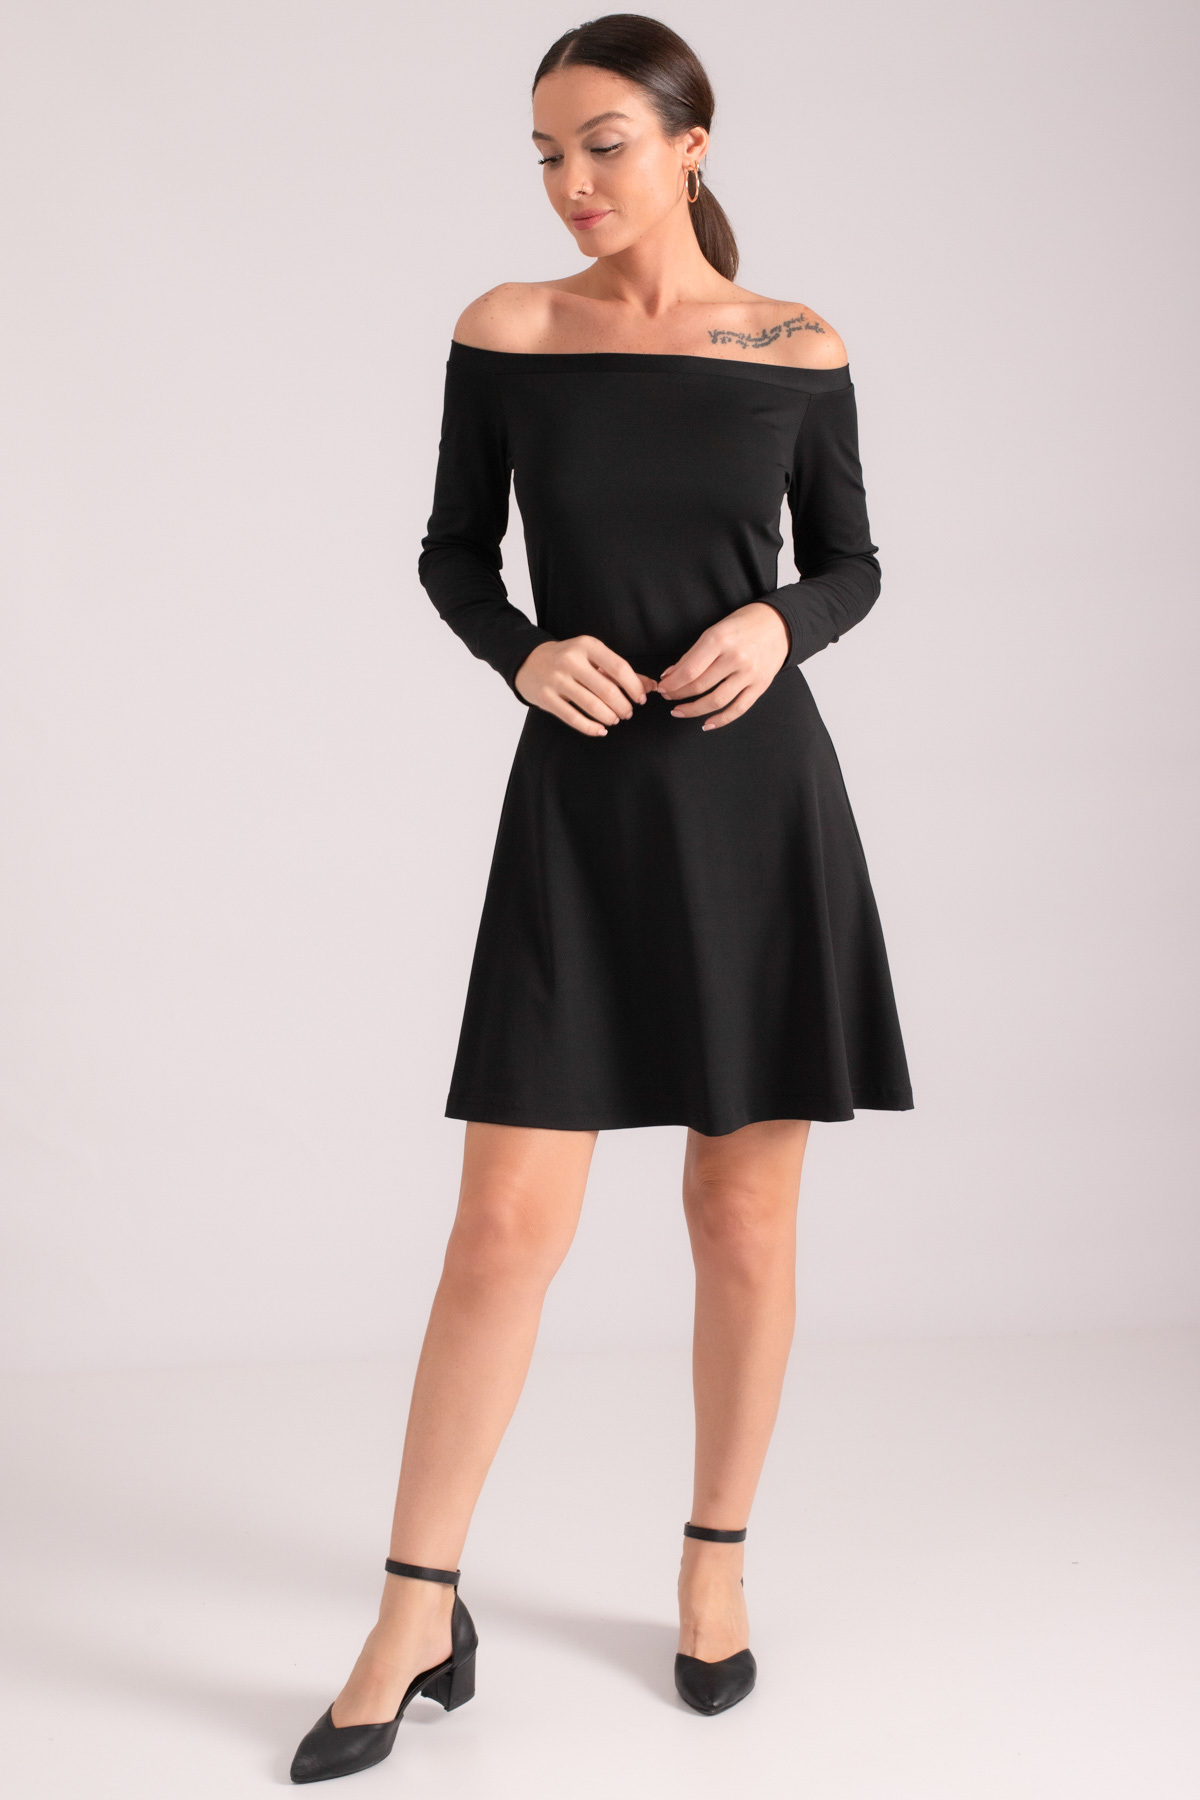 armonika Women's Black Carmen Collar Long Sleeve Flared Mini Dress